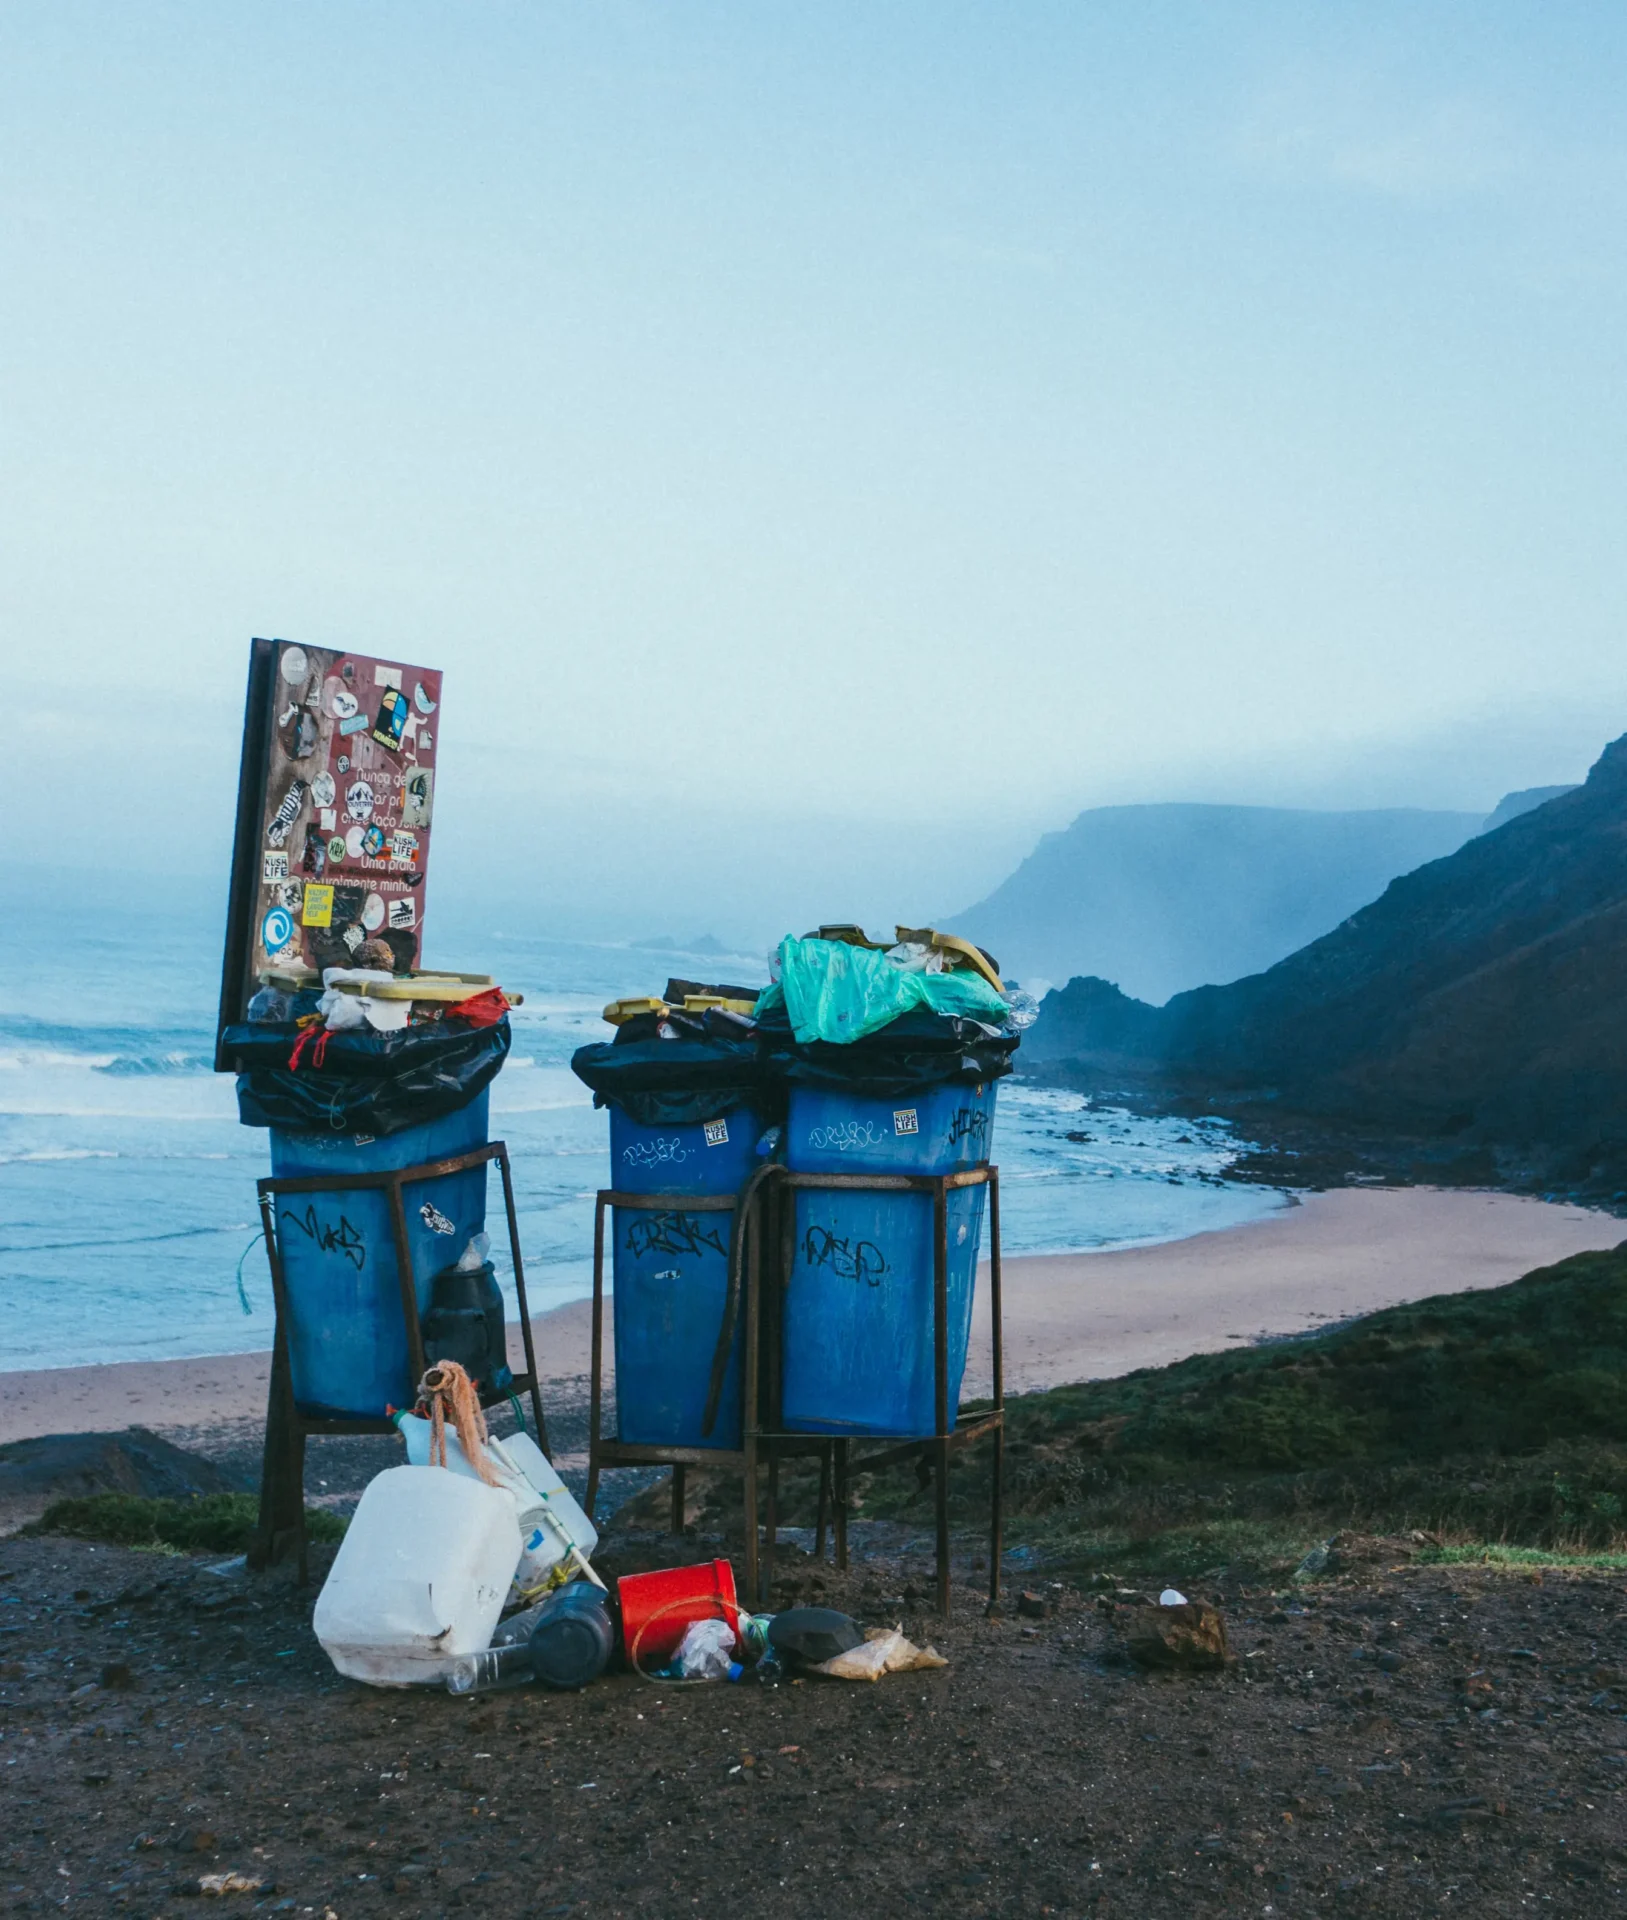 Trash bins full of junk near the shore